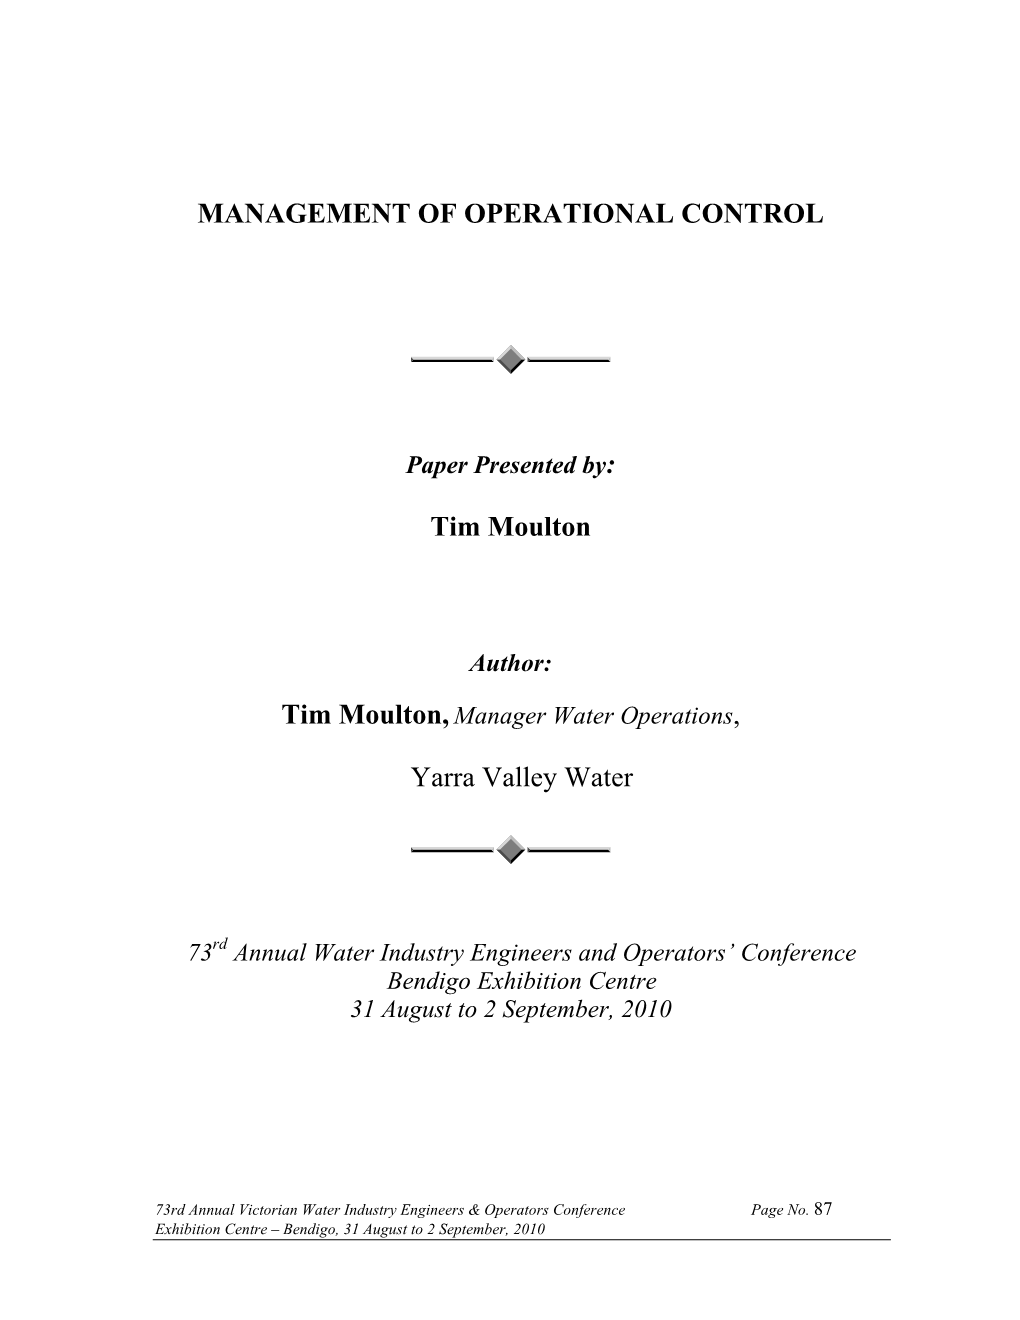 MANAGEMENT of OPERATIONAL CONTROL Tim Moulton Yarra